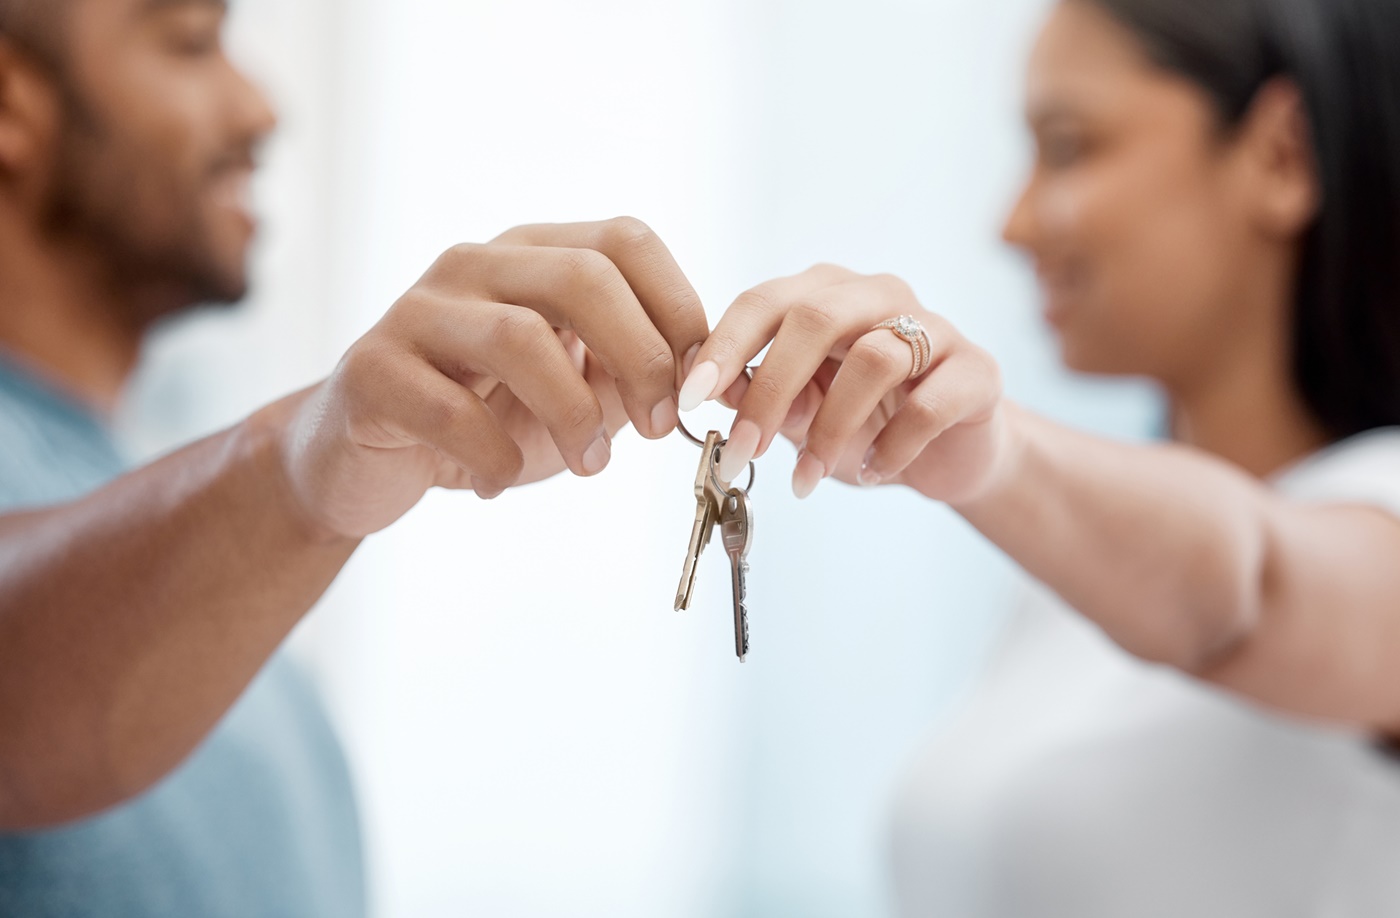 Couple Holding Set of Keys Together